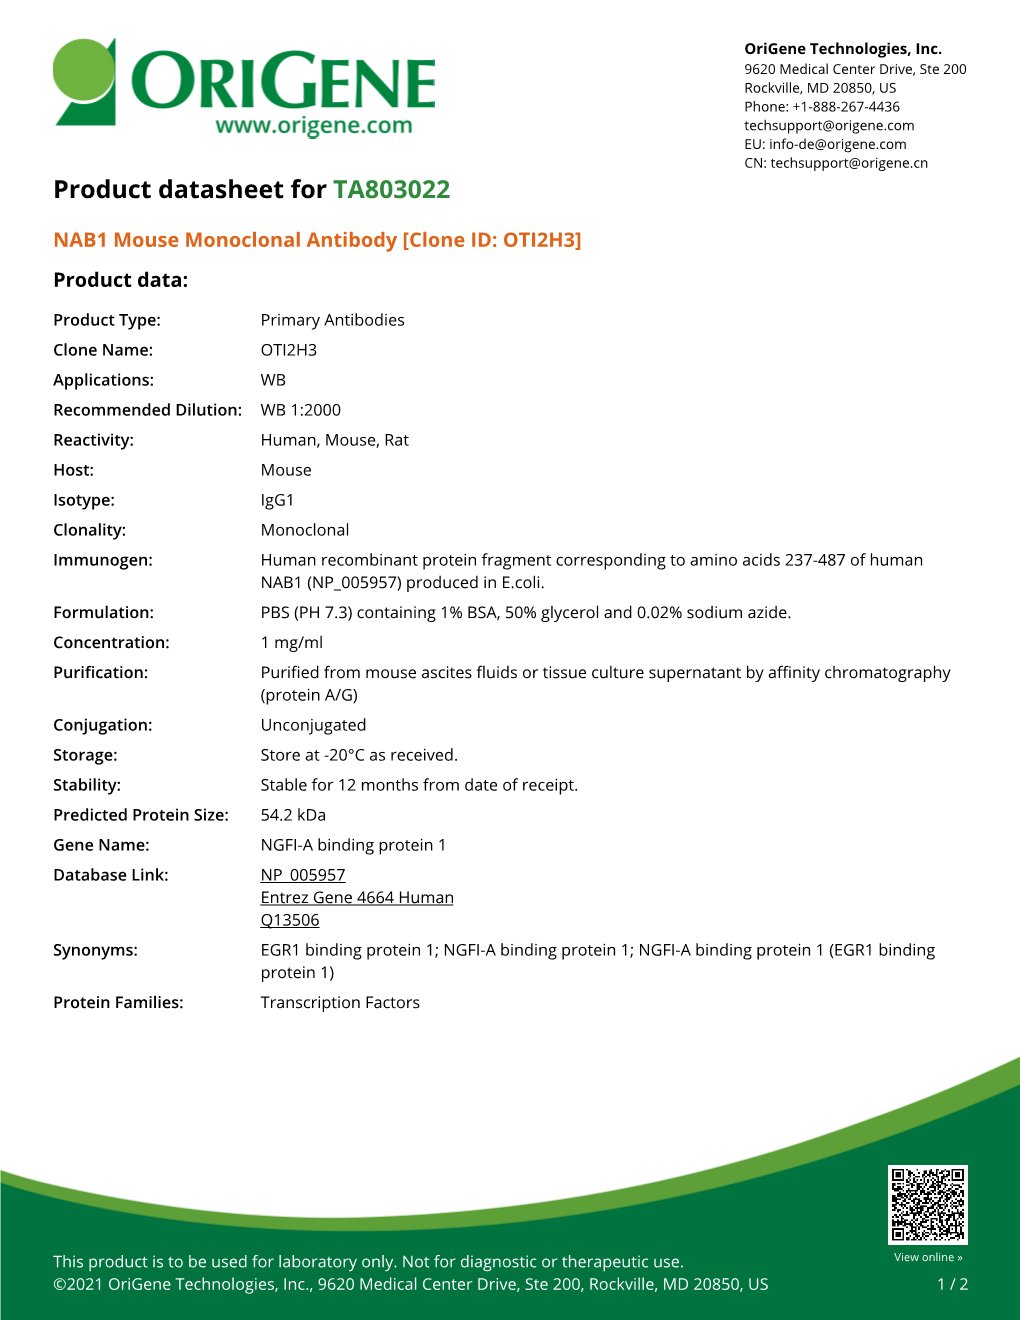 NAB1 Mouse Monoclonal Antibody [Clone ID: OTI2H3] Product Data